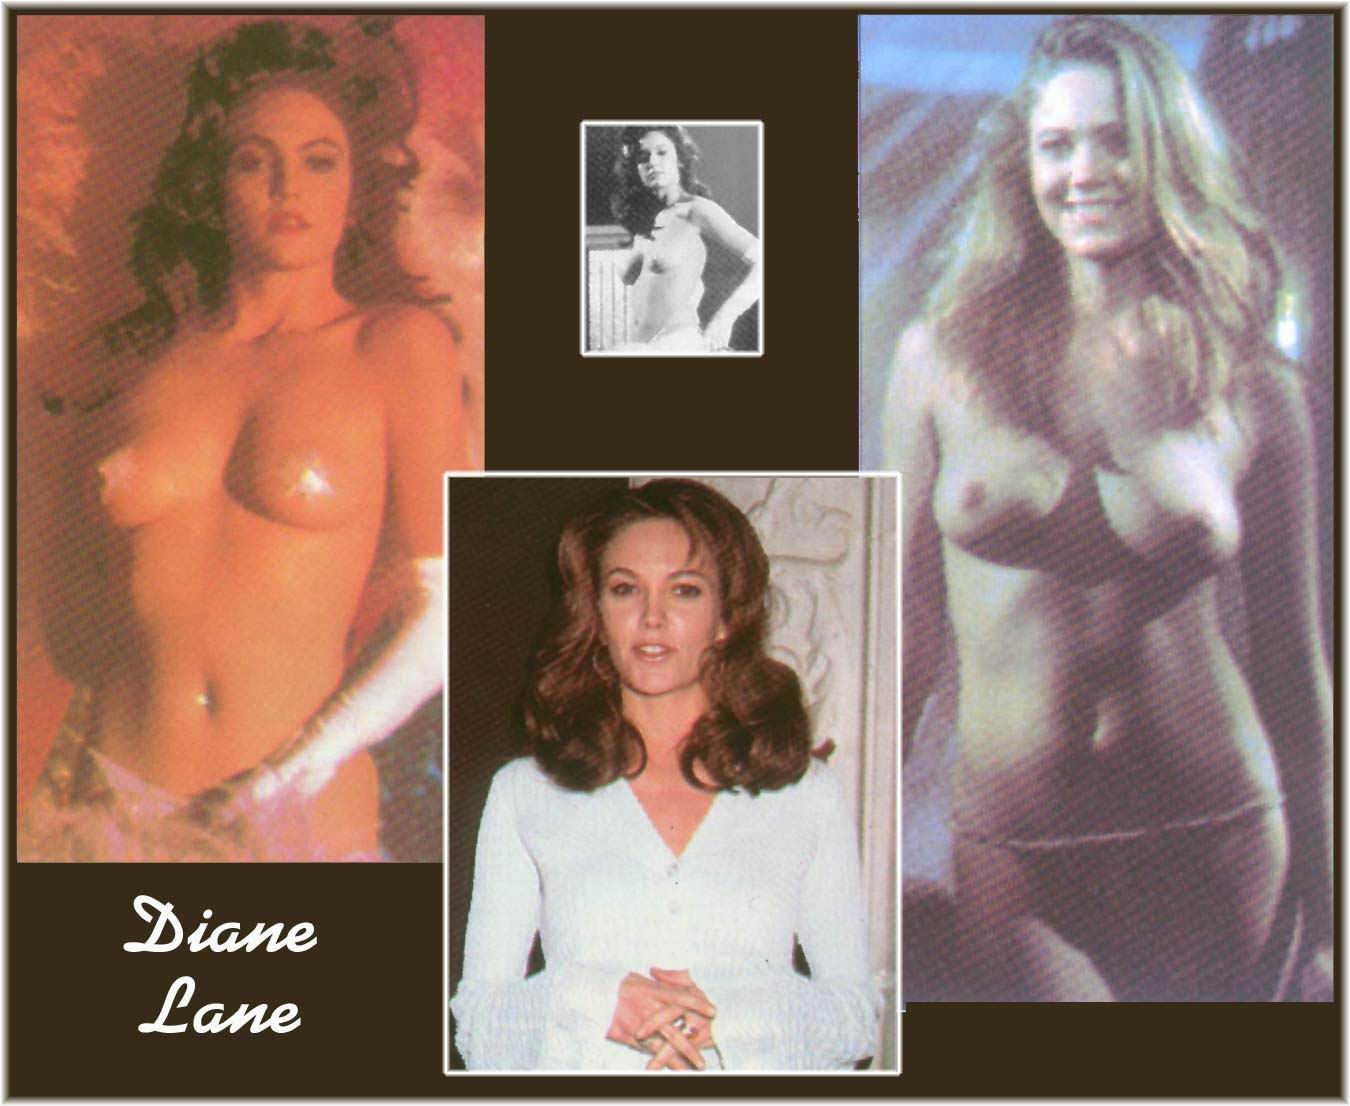 Diane ladd naked